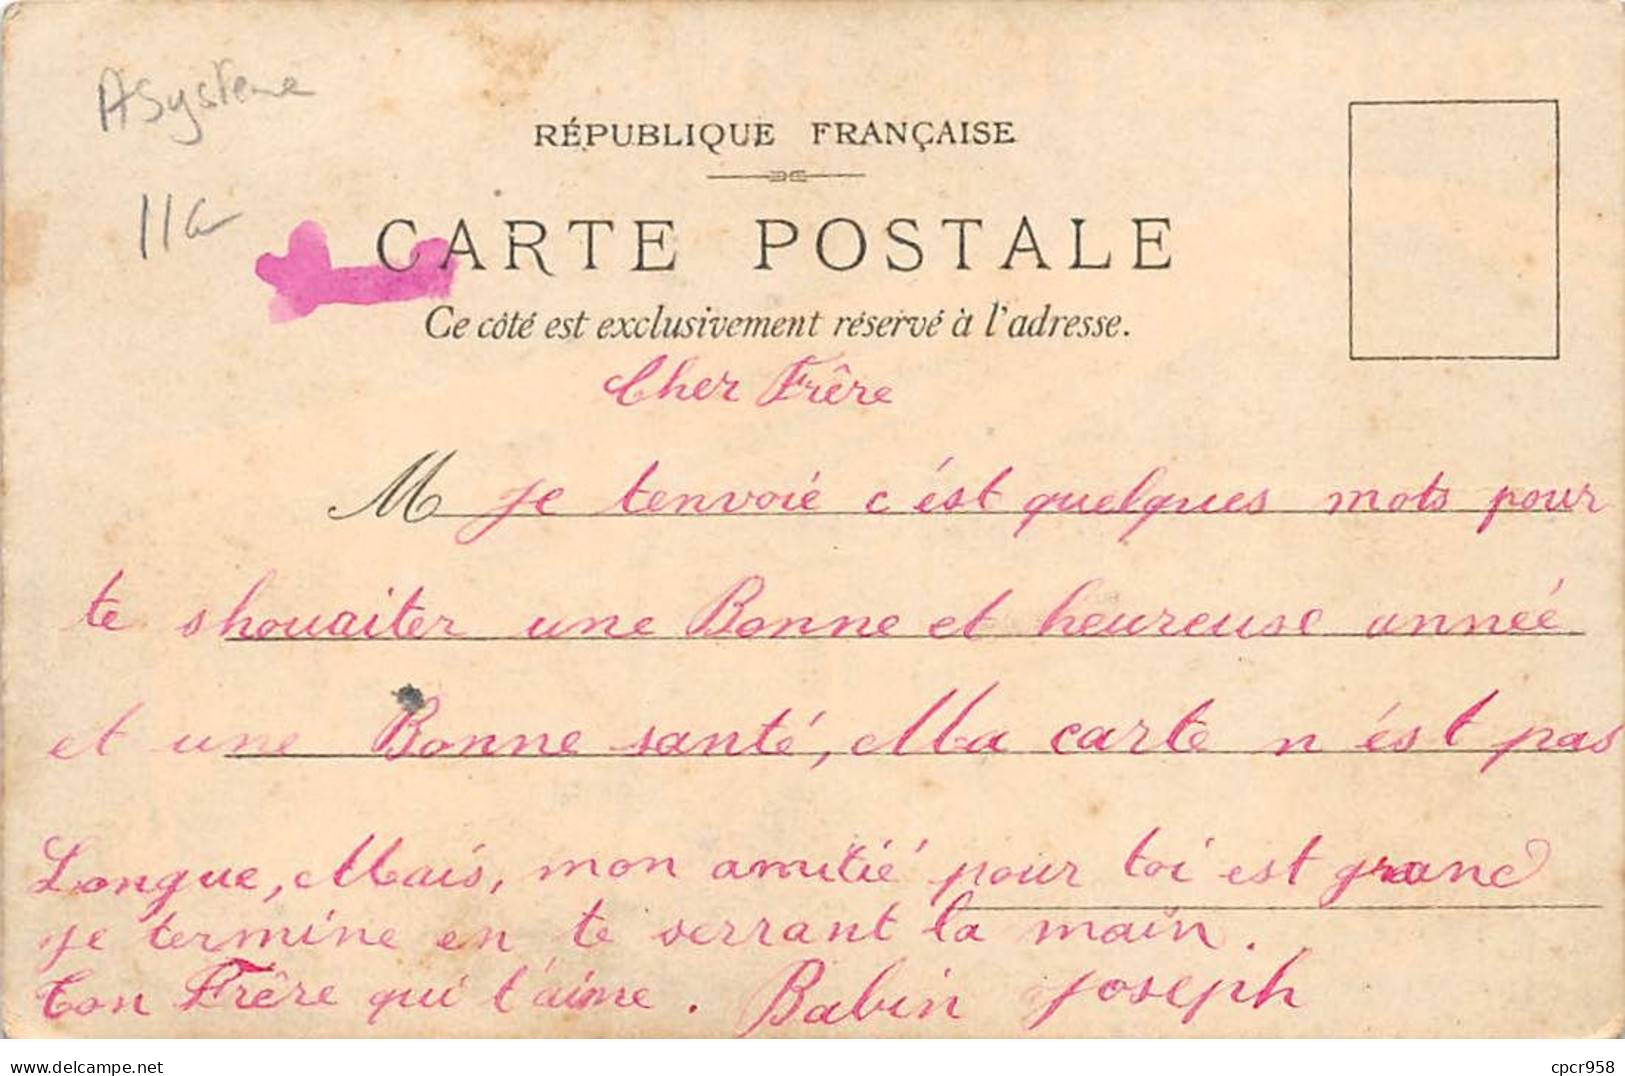 Carte à Système - N°87954 - Carte Transparente - Biscuits Lu Lefevre-Utile - Grand Prix - Paris 1900 - Nice - Mechanical